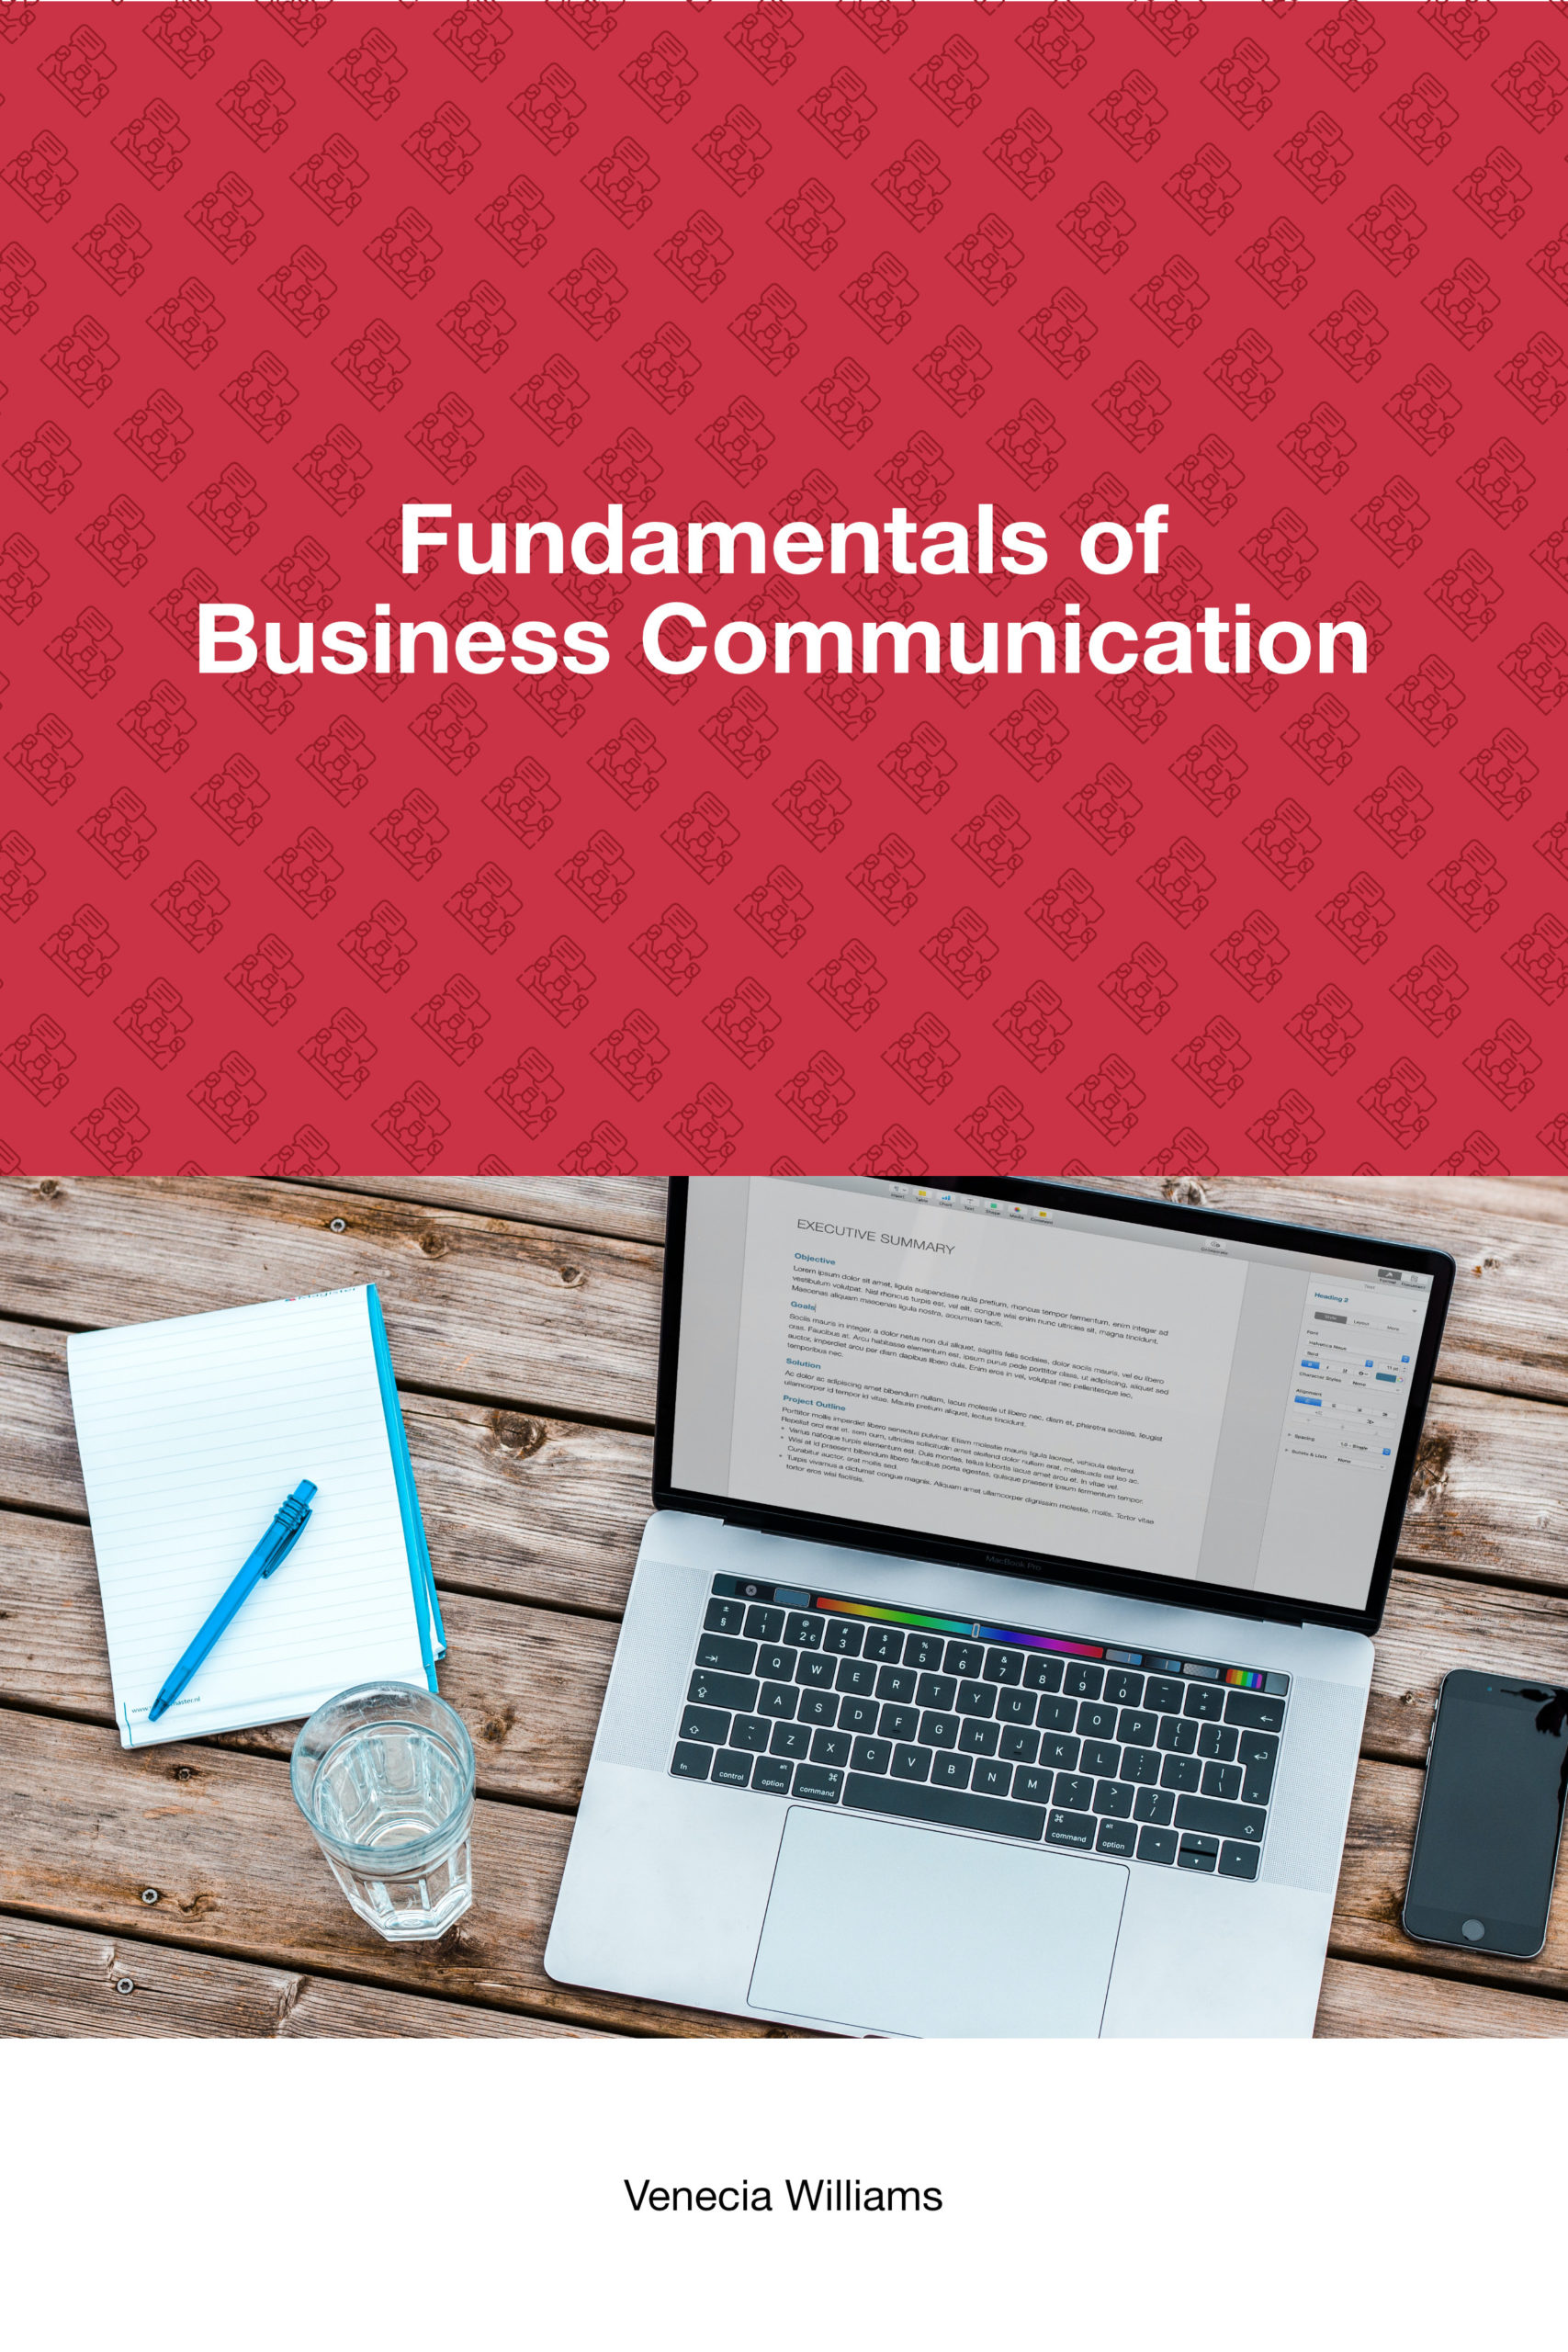 case study on business communication